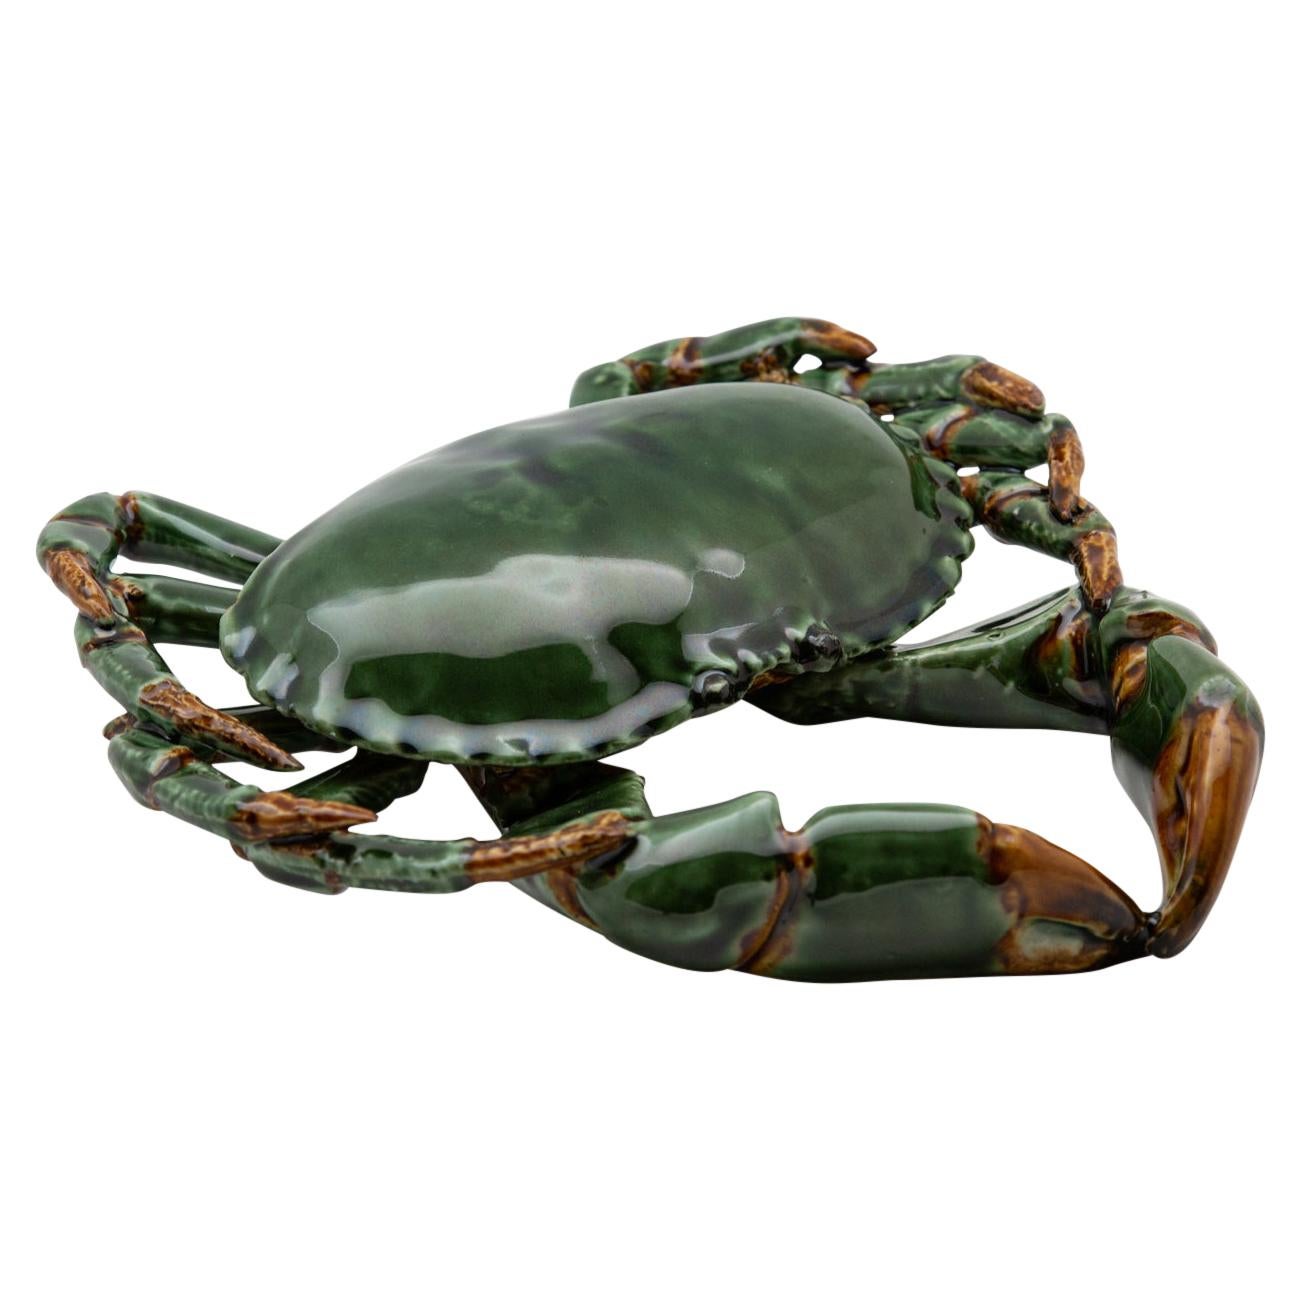 Portuguese Handmade Pallissy or Majollica Green Ceramic Crab